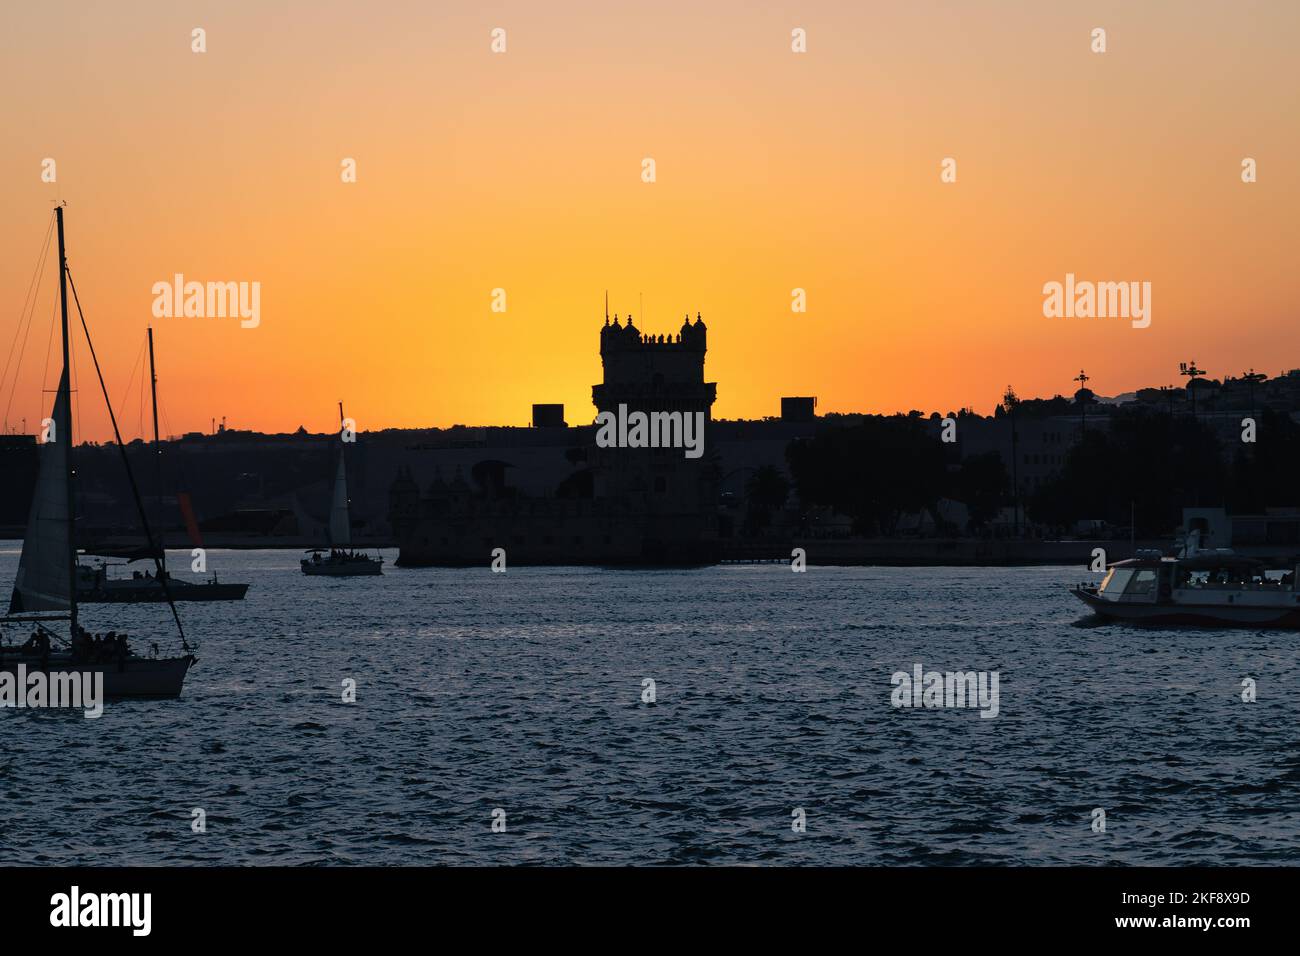 Sonnenuntergang über dem Fluss Tejo in Belém, Lissabon, Portugal. Die Silhouette des Belém-Turms, Torre de Belém. Festung aus dem 16.. Jahrhundert, UNESCO-Weltkulturerbe. Stockfoto